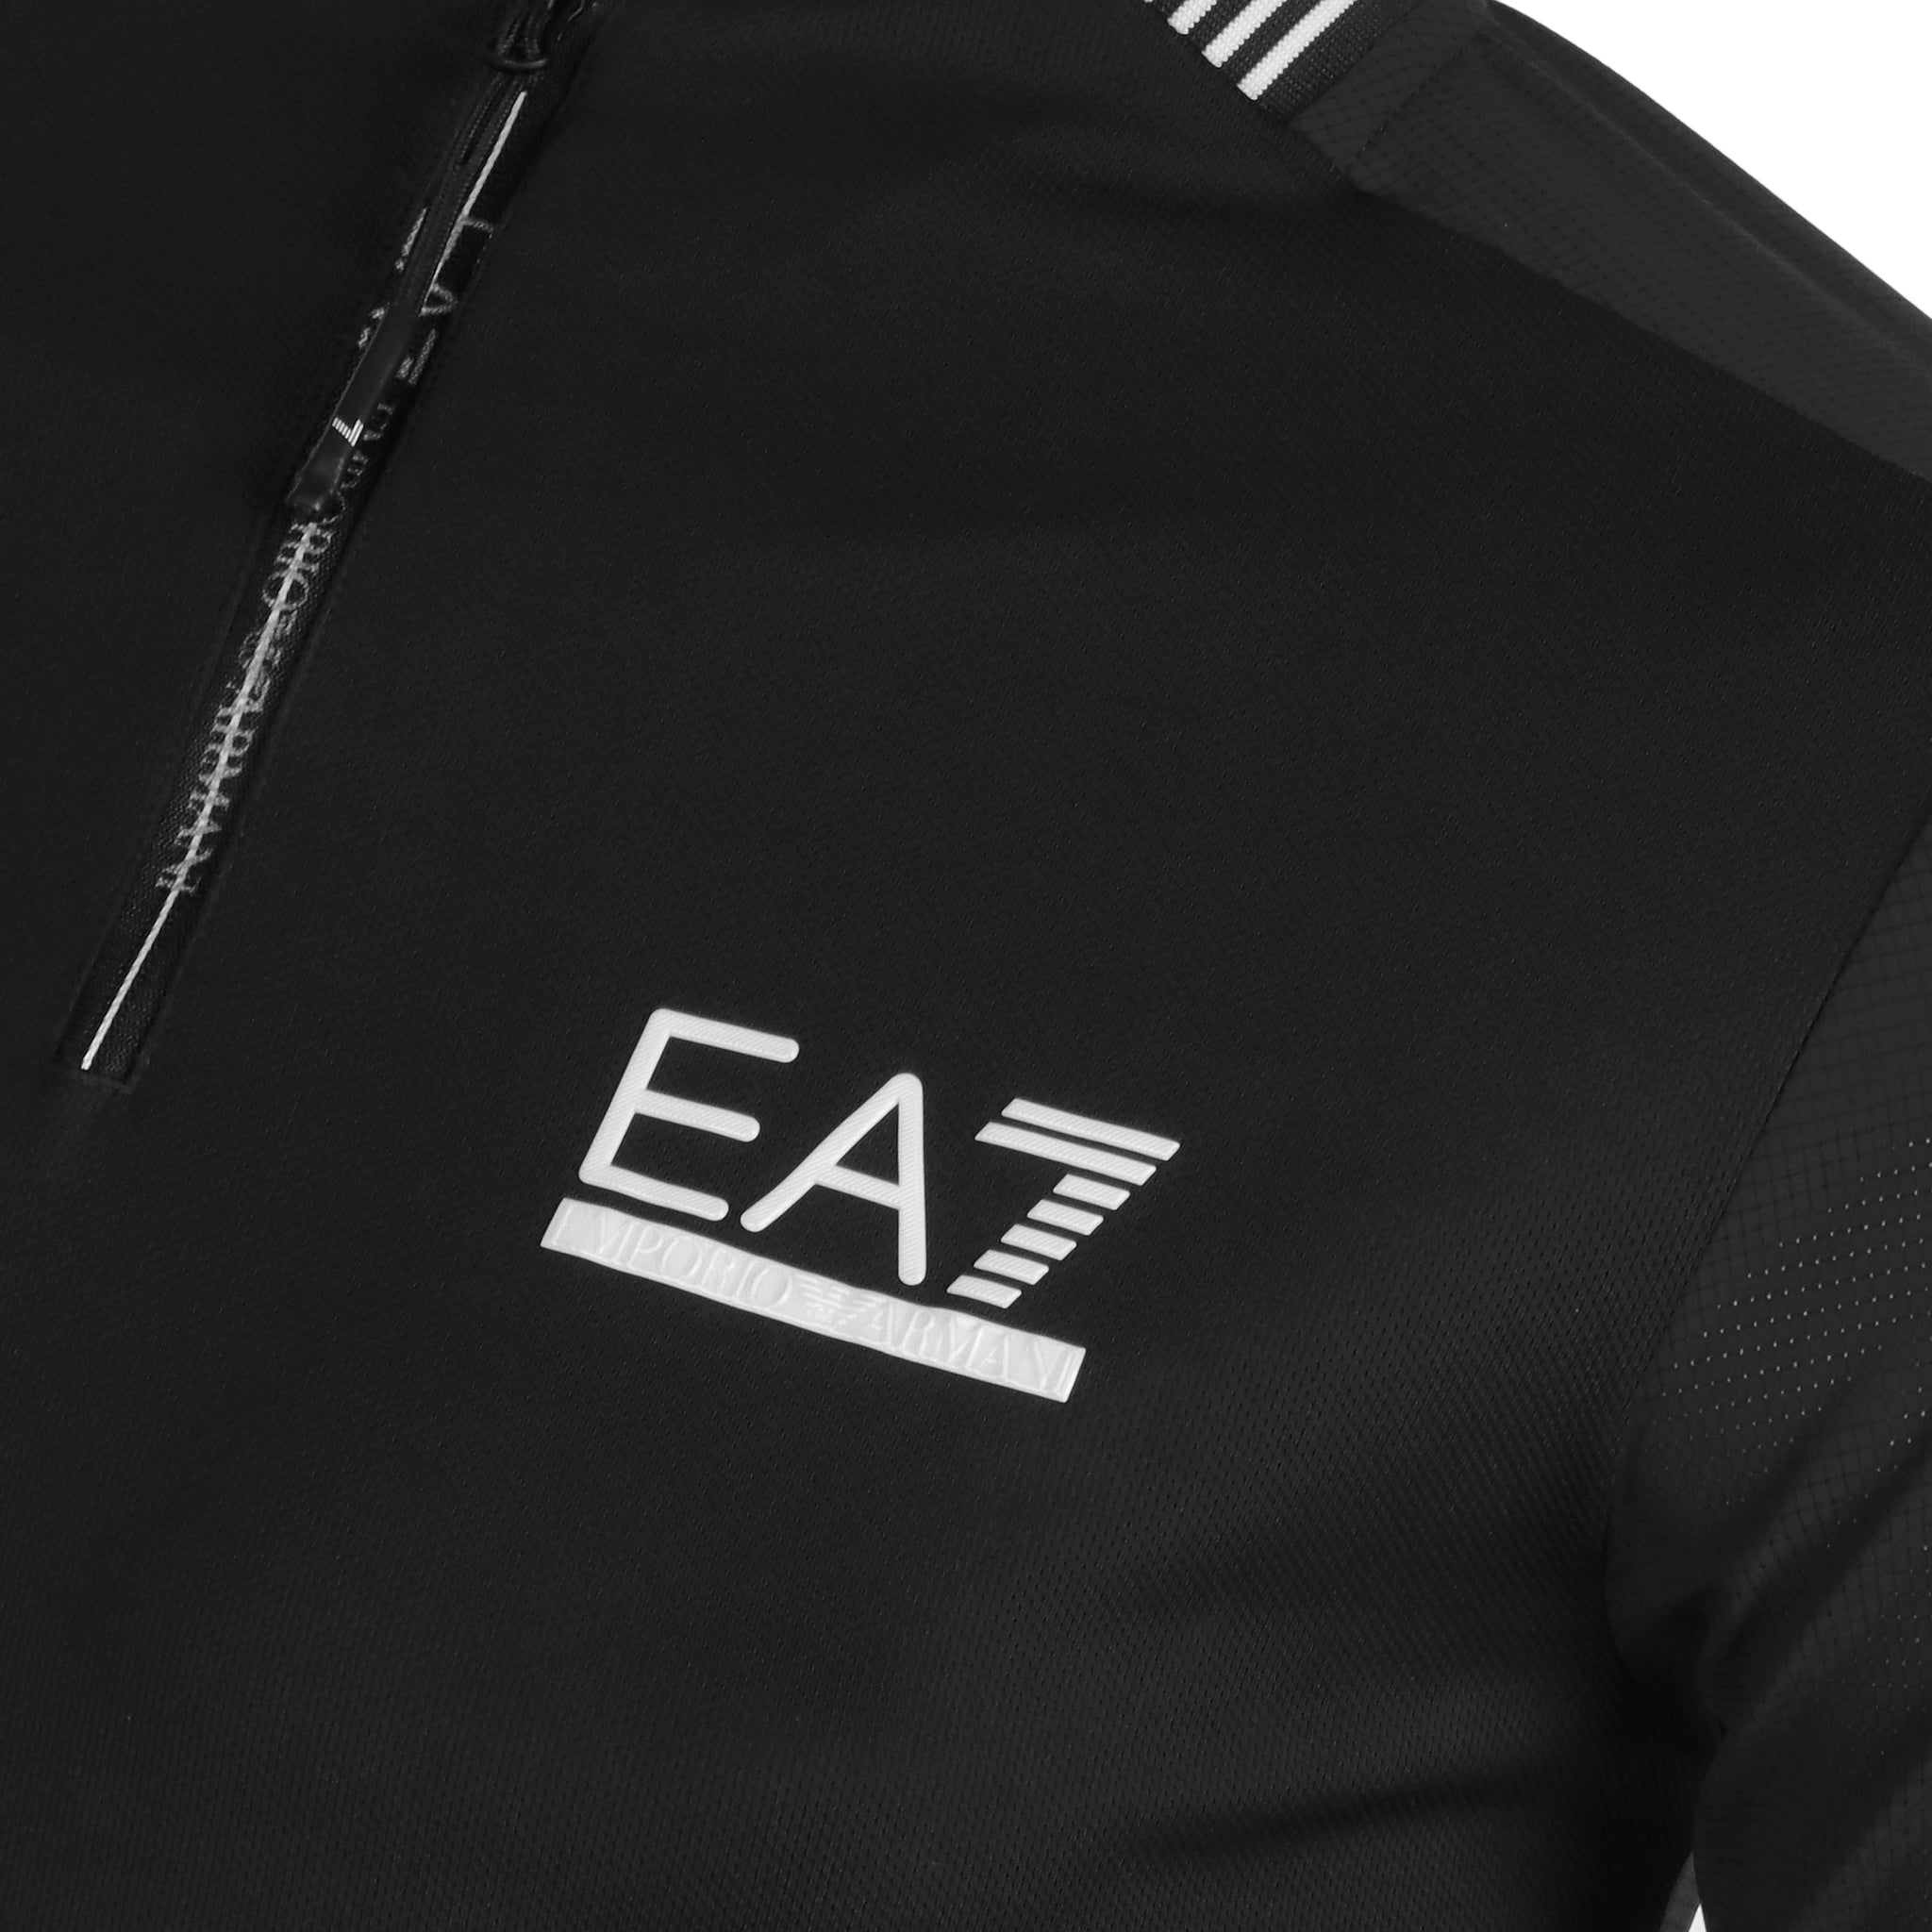 Emporio Armani EA7 Golf Ventus7 Zip Neck LS Shirt